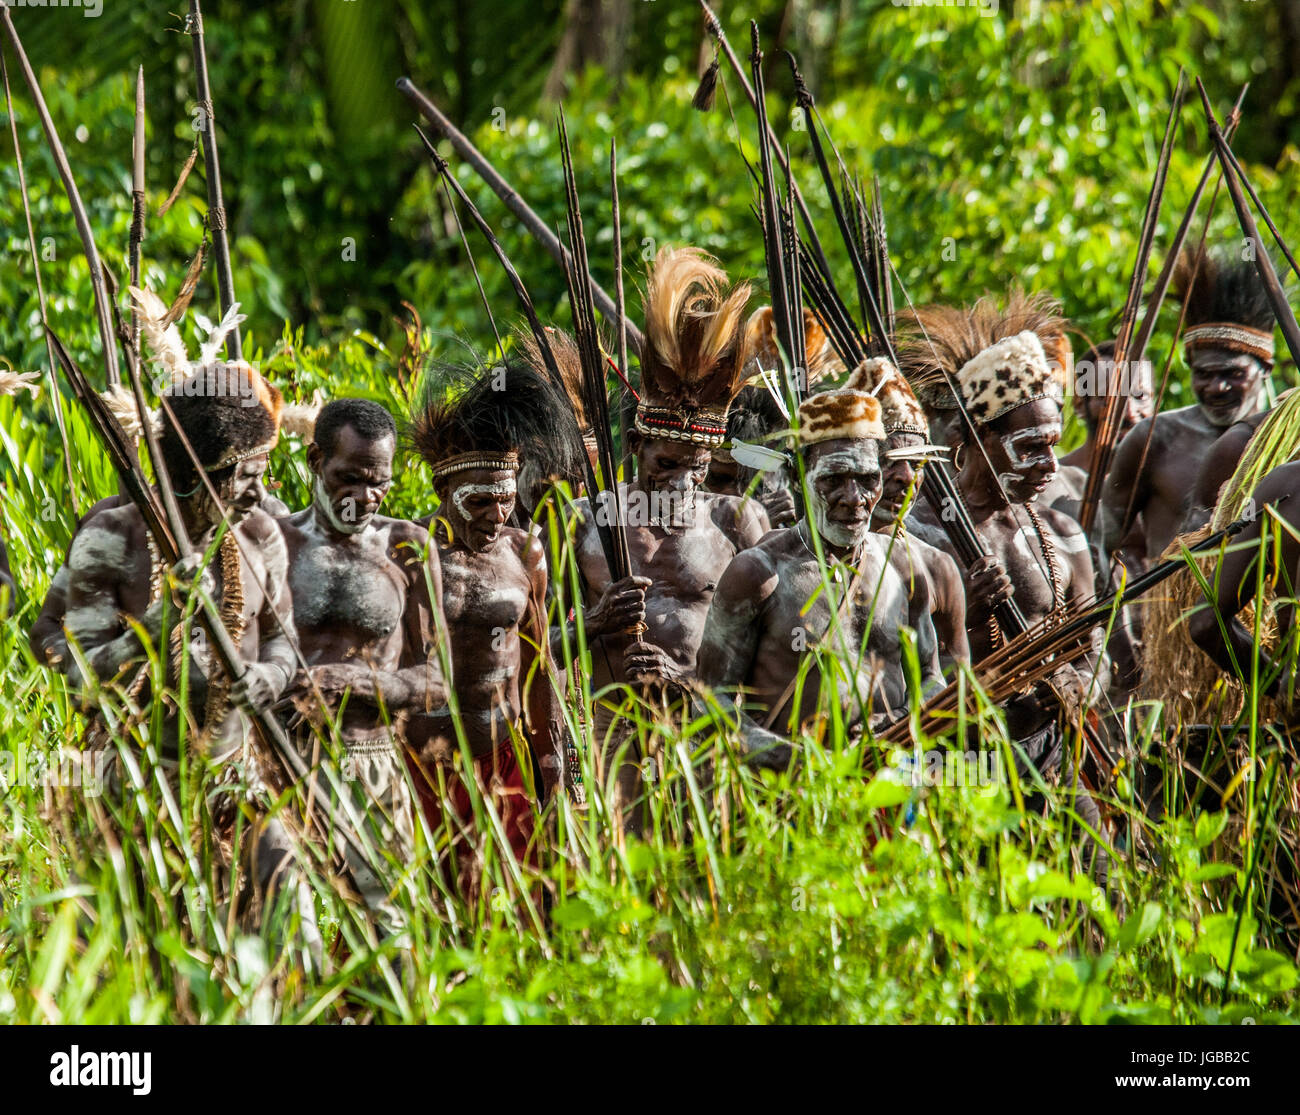 INDONESIA, IRIAN JAYA, ASMAT PROVINCE, JOW VILLAGE - JUNE 12: Asmat tribe warrior with bow and arrow. Stock Photo